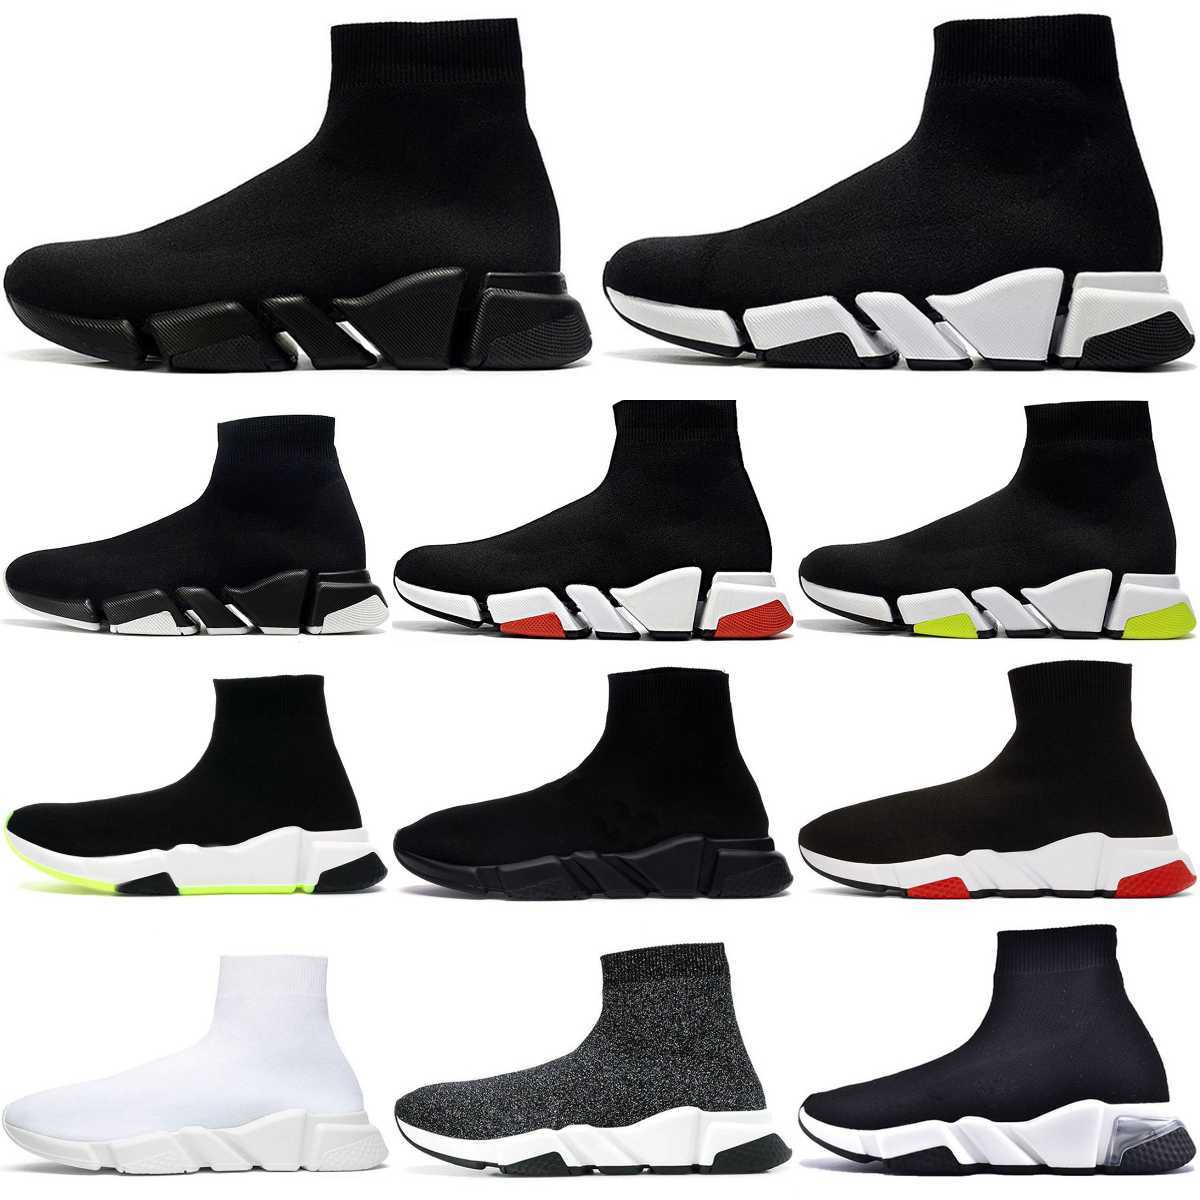 Trainers Speeds 2.0 V2 Shoes Platform Sneaker Men Women Tripler s Paris Socks Boots All Black White Blue Light Sliver Brown Ruby Graffiti Vintage Luxury Designer